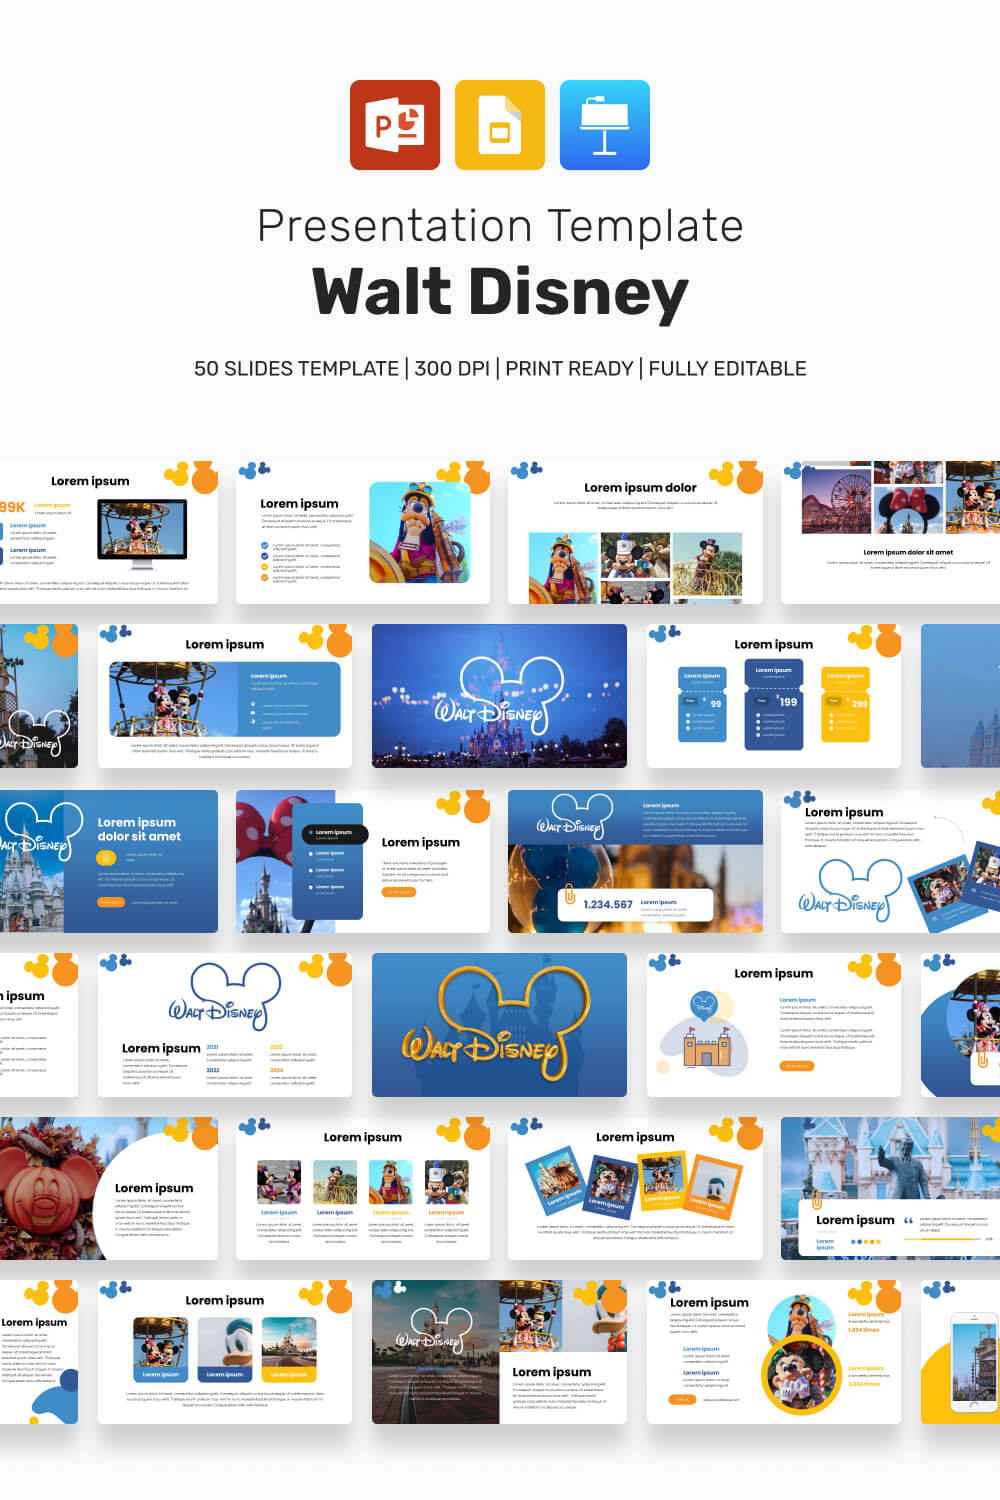 Walt Disney Presentation Template pinterest image.